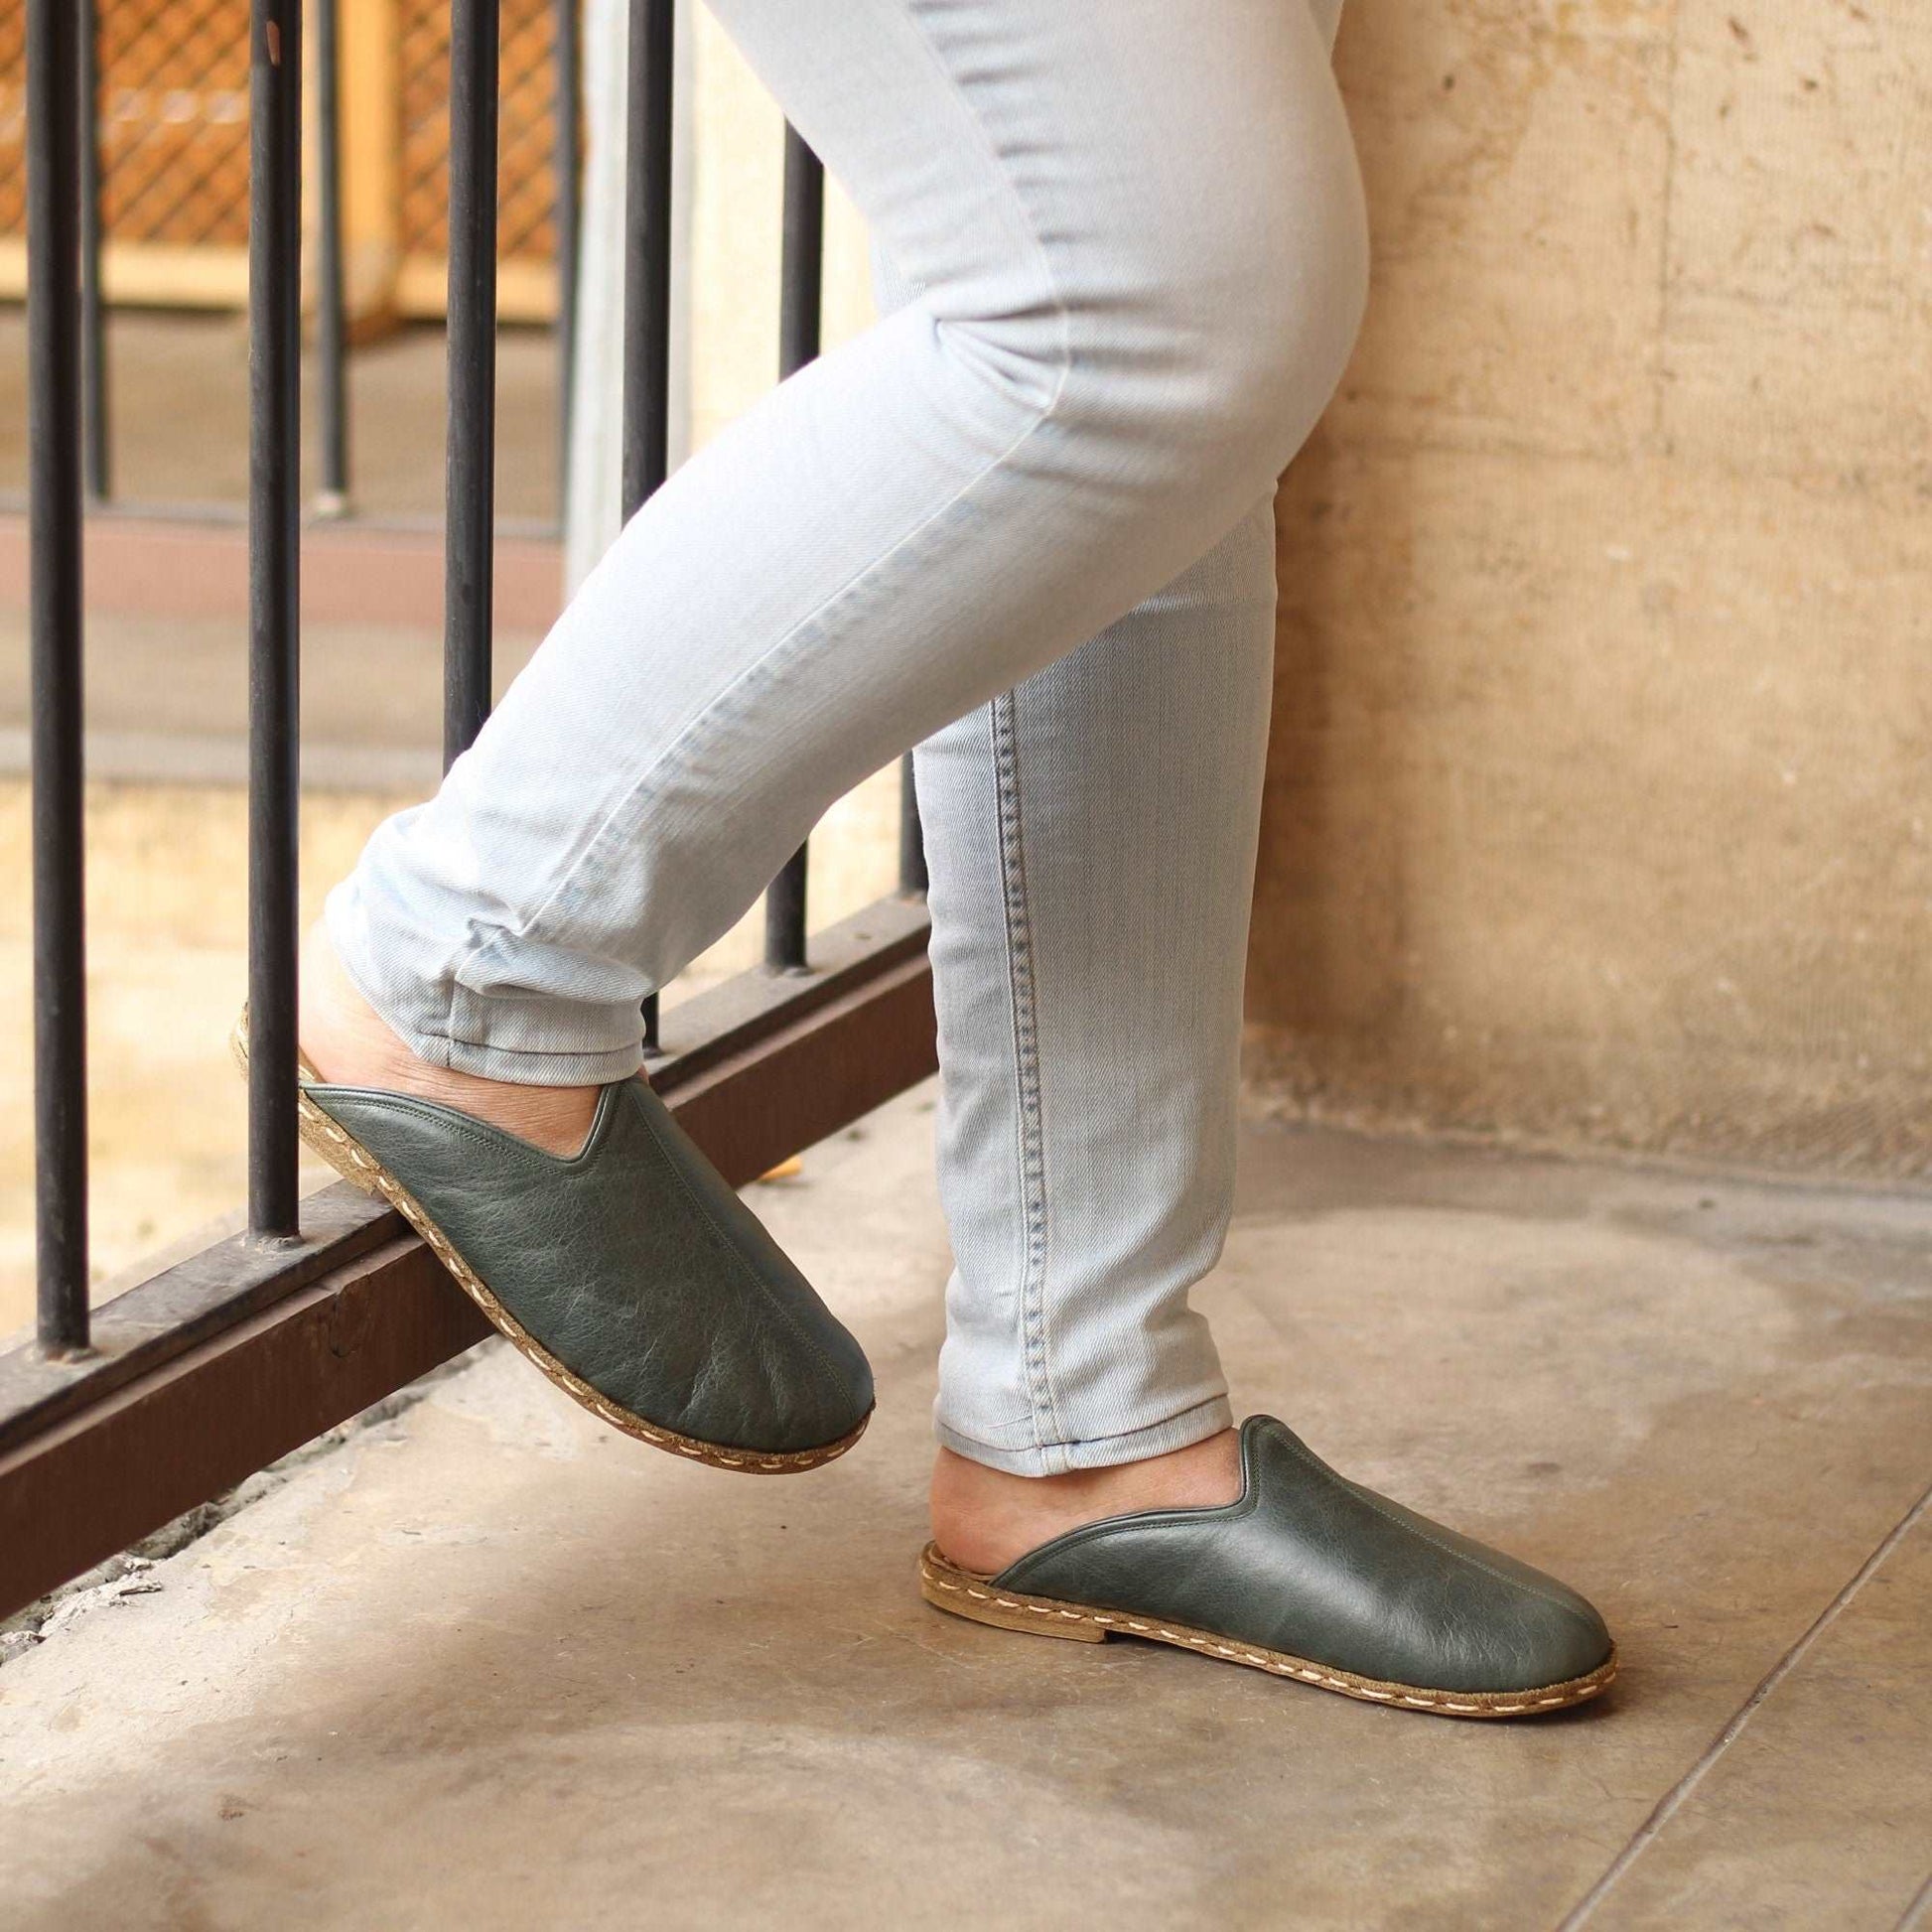 Womens Leather Bottom Slippers Handmade Barefoot - Nefes Shoes